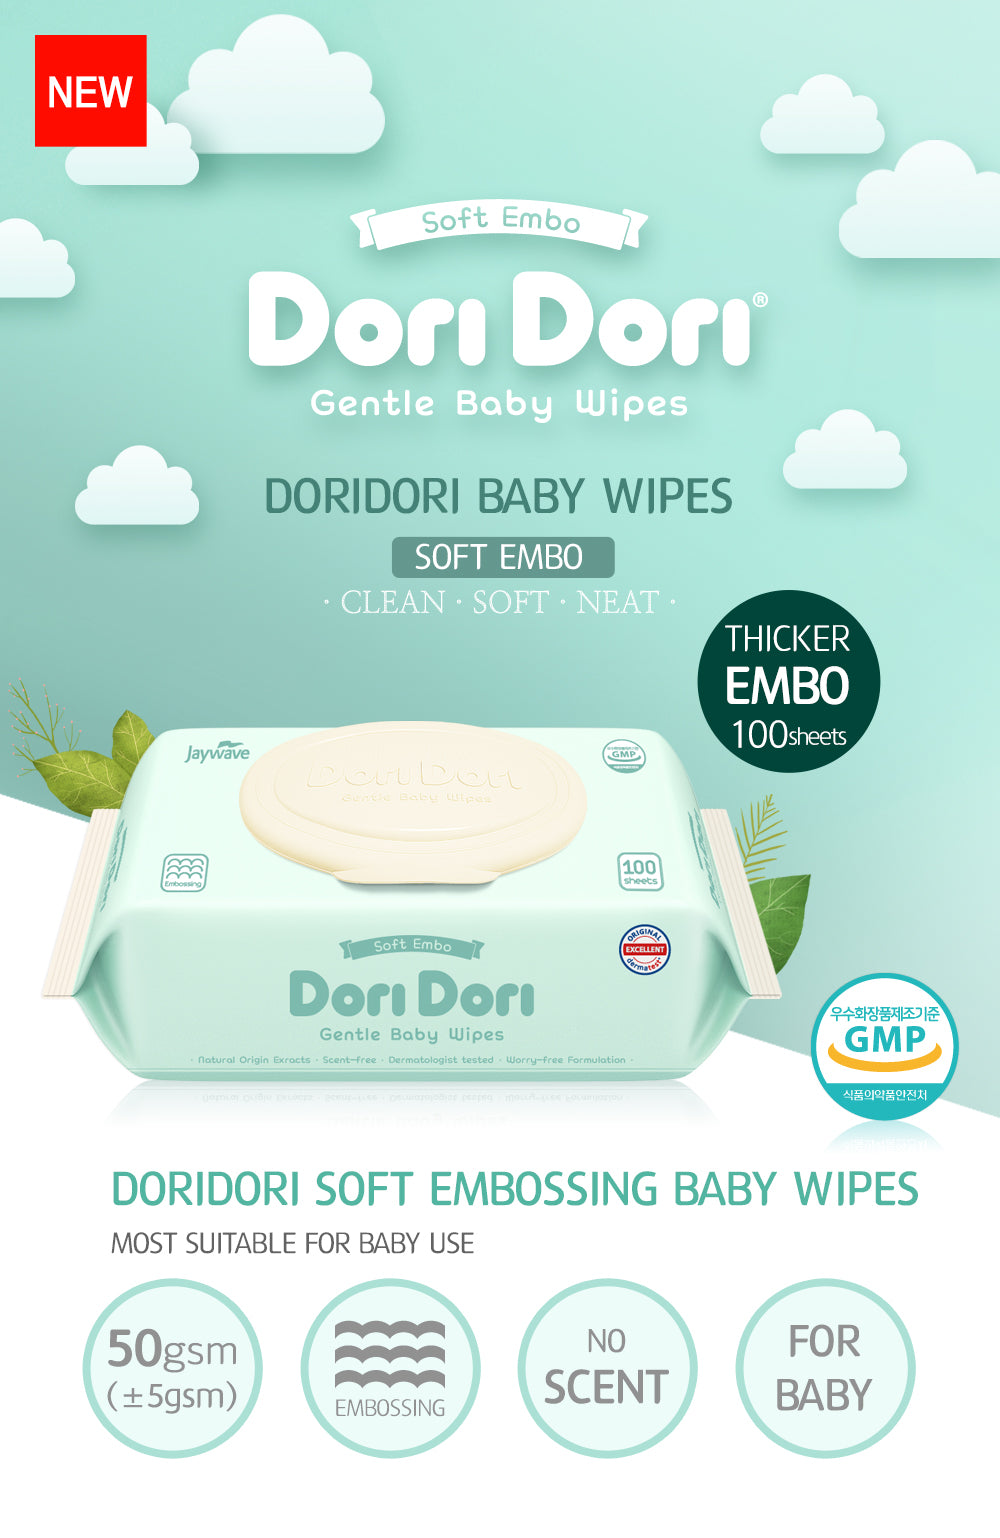 Dori Dori Soft Embossing CAP 100 sheets x 10 packs